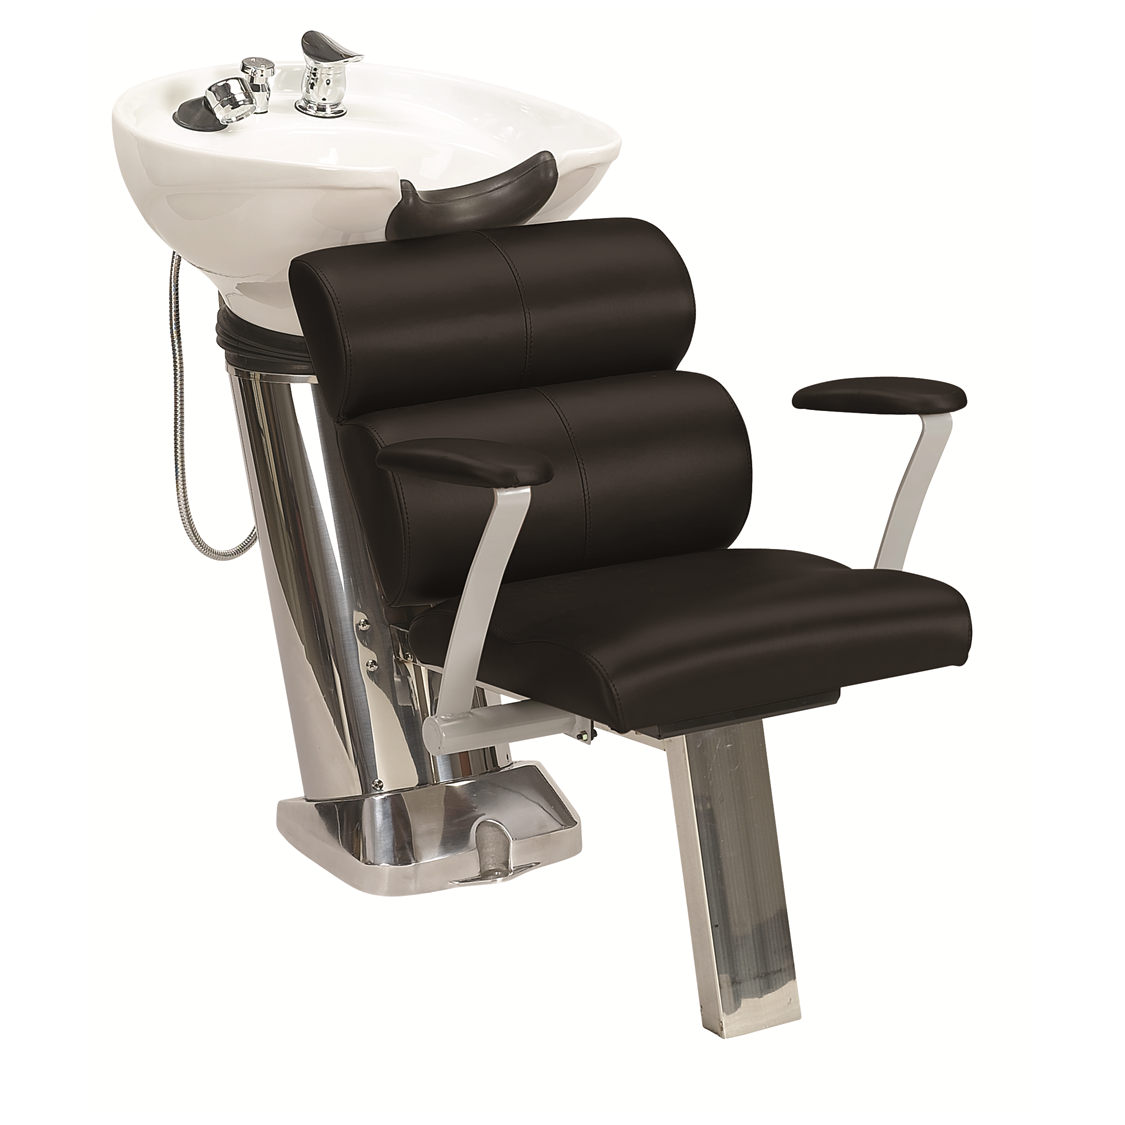 50B Shampoo System, White-Black - Garfield Commercial Enterprises Salon Equipment Spa Furniture Barber Chair Luxury